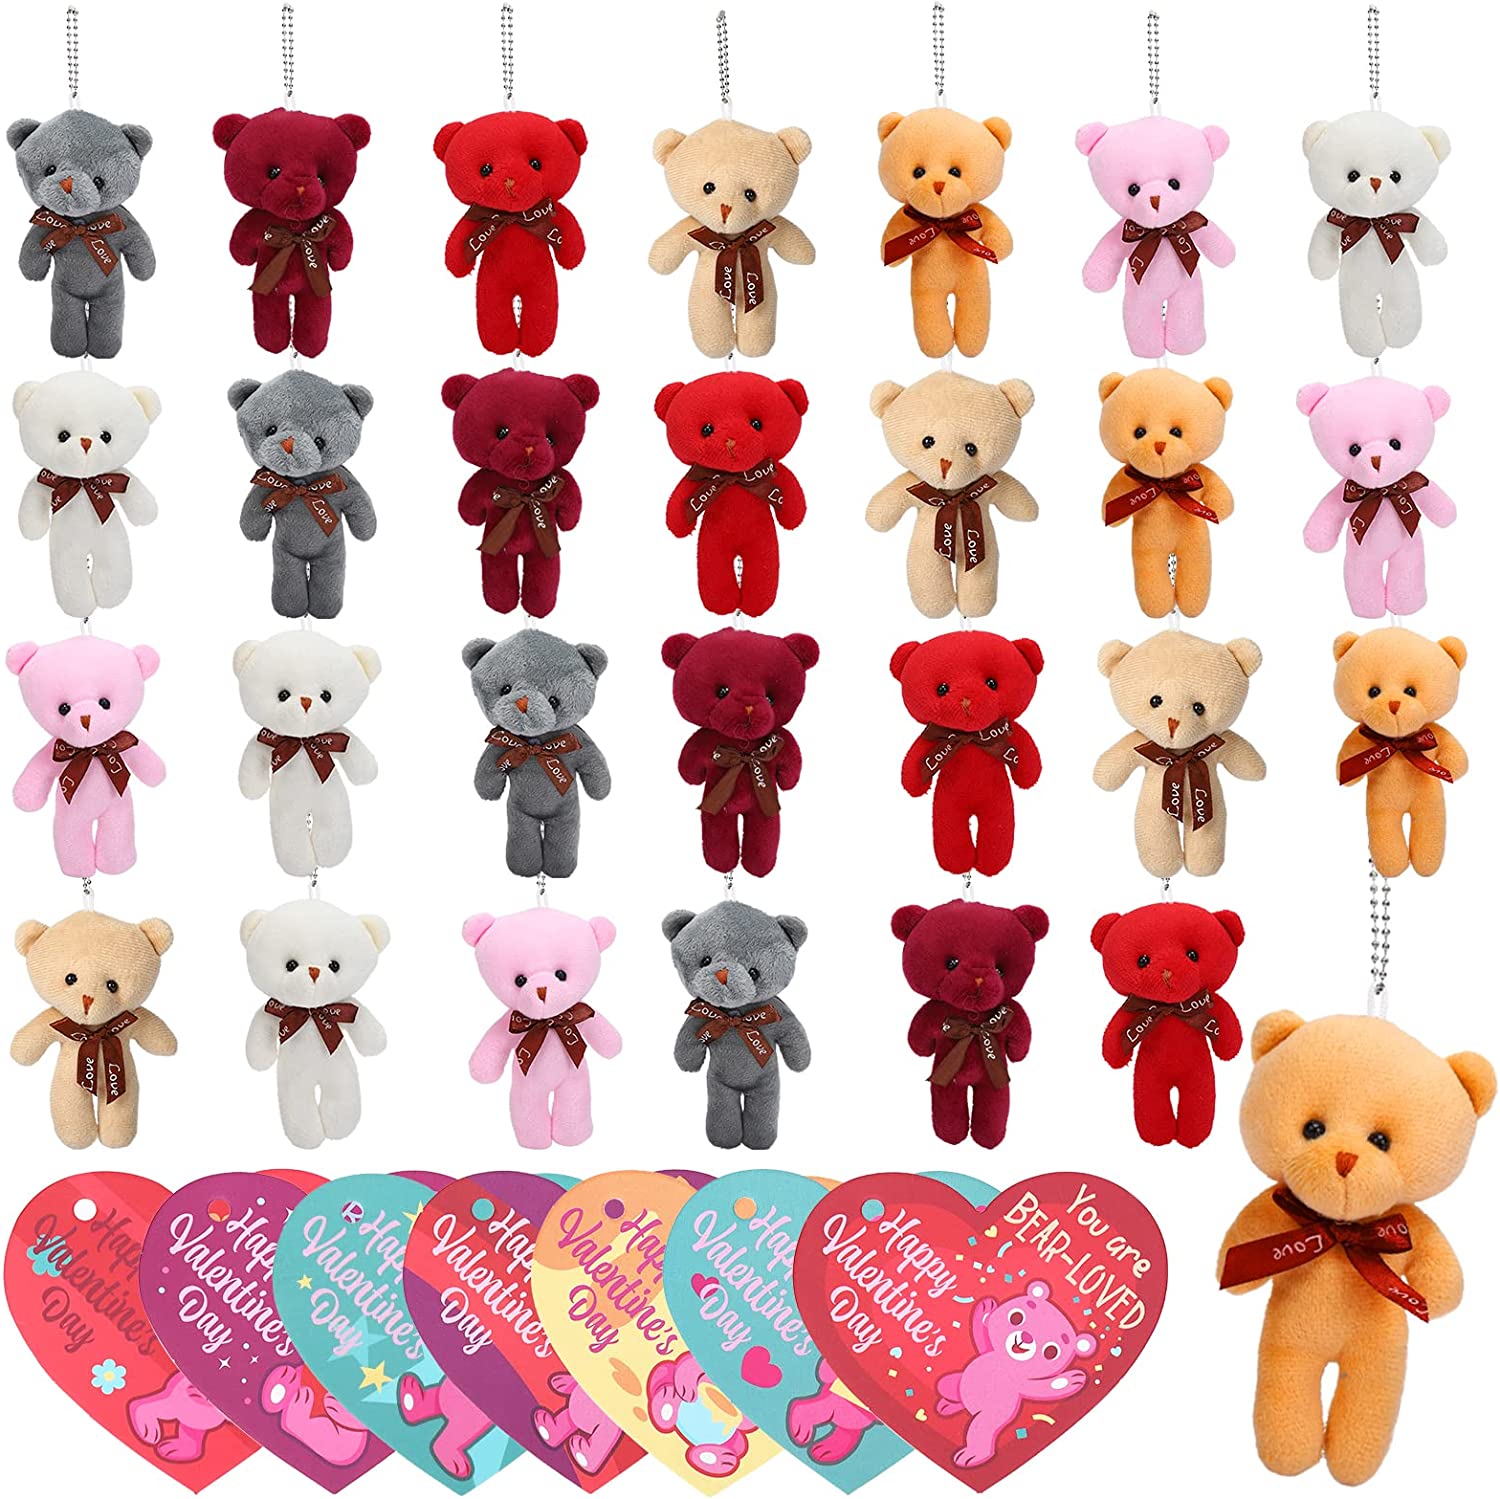 morismos 3 packs teddy bear stuffed animals plush